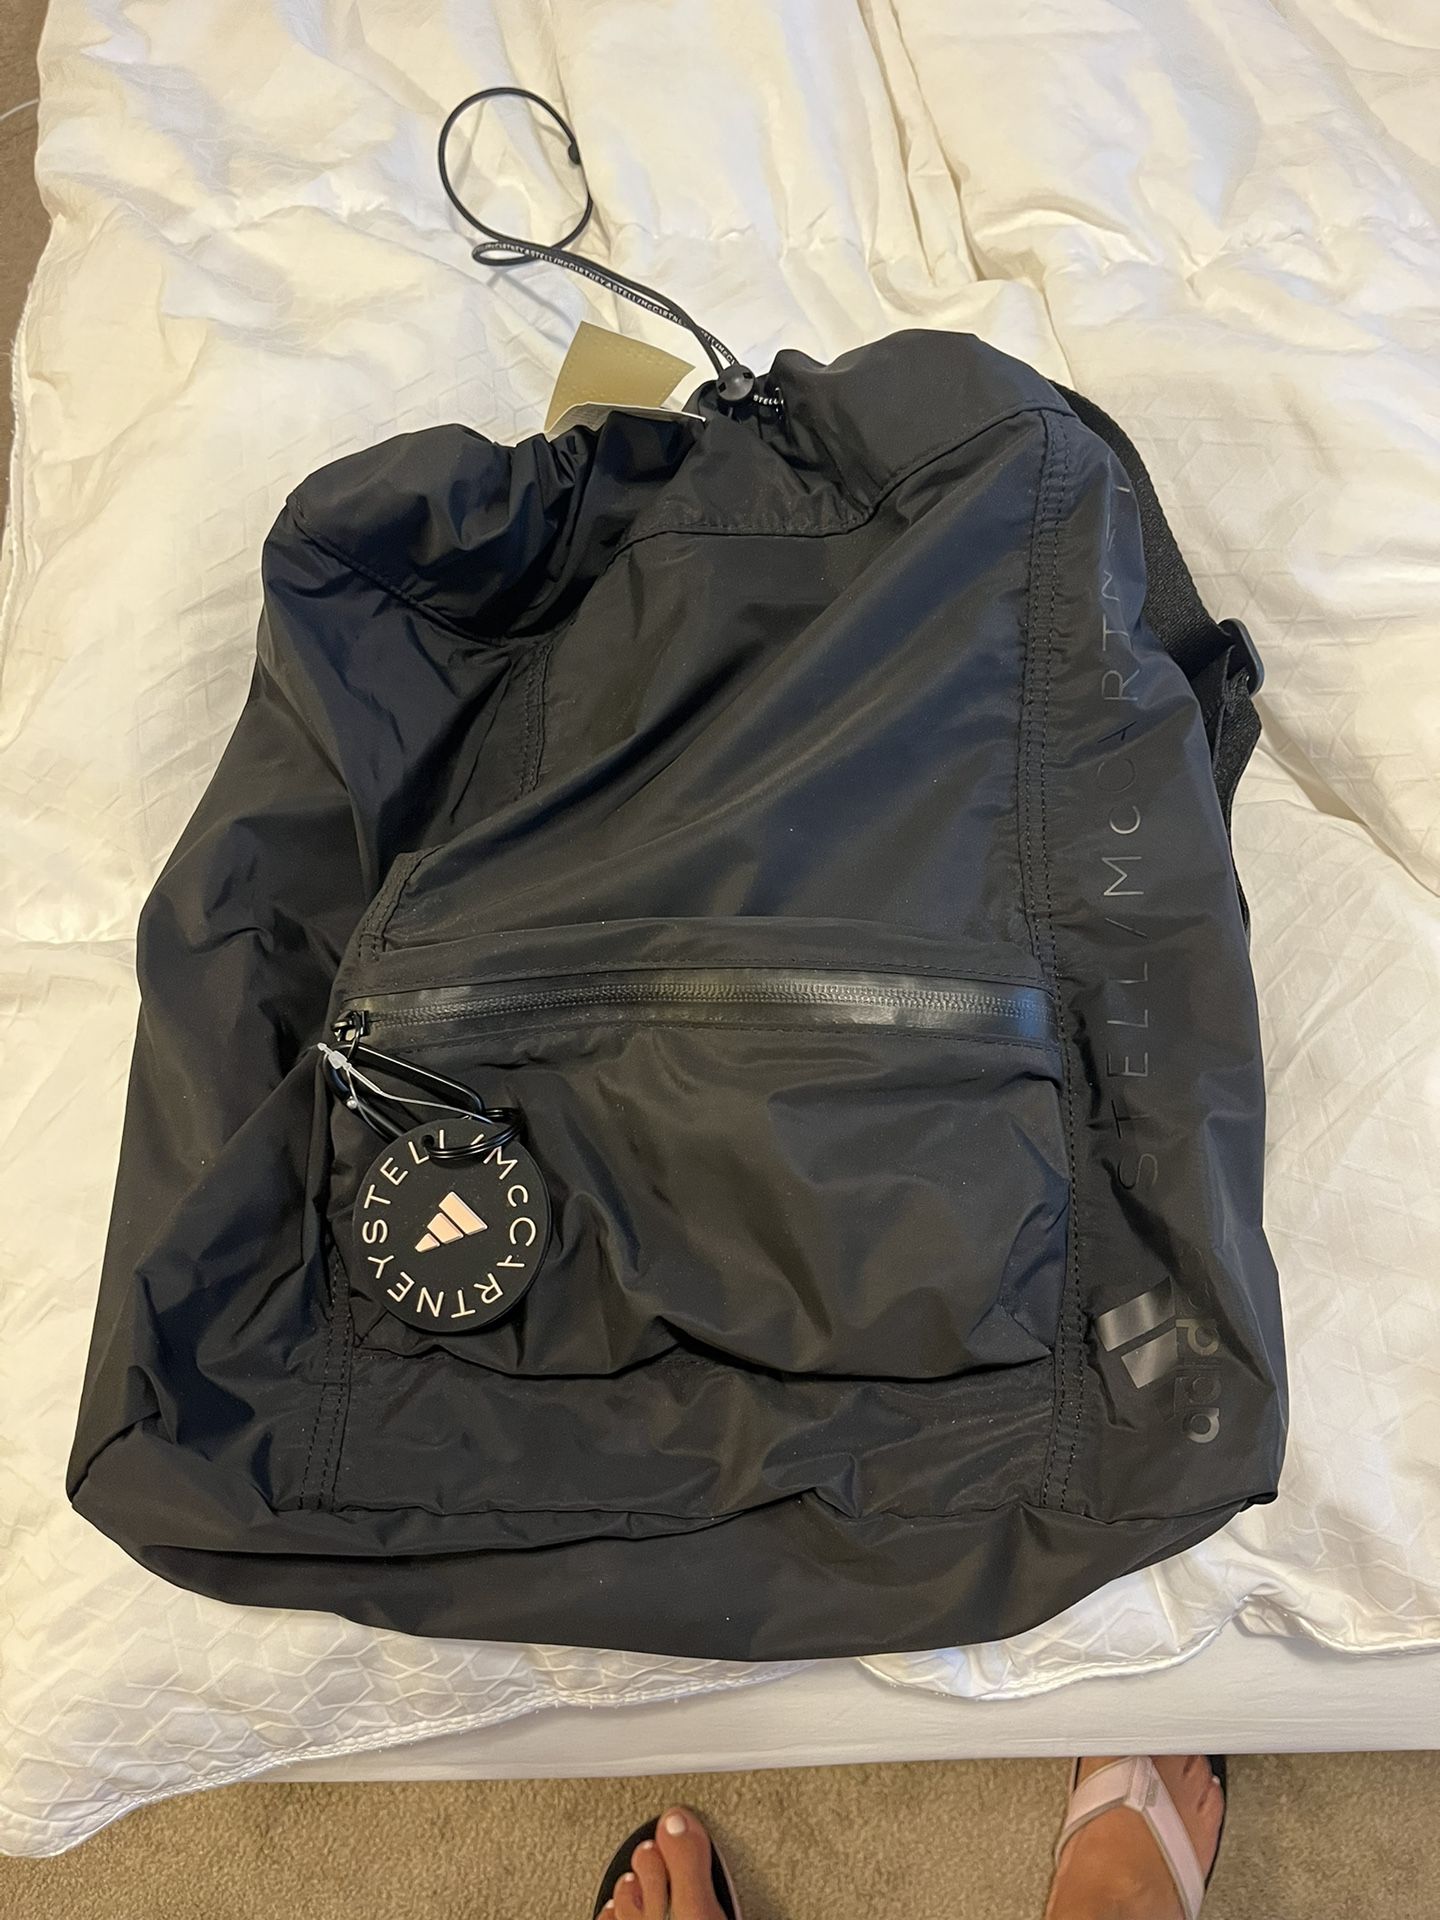 BRAND NEW Adidas Bag/ Backpack